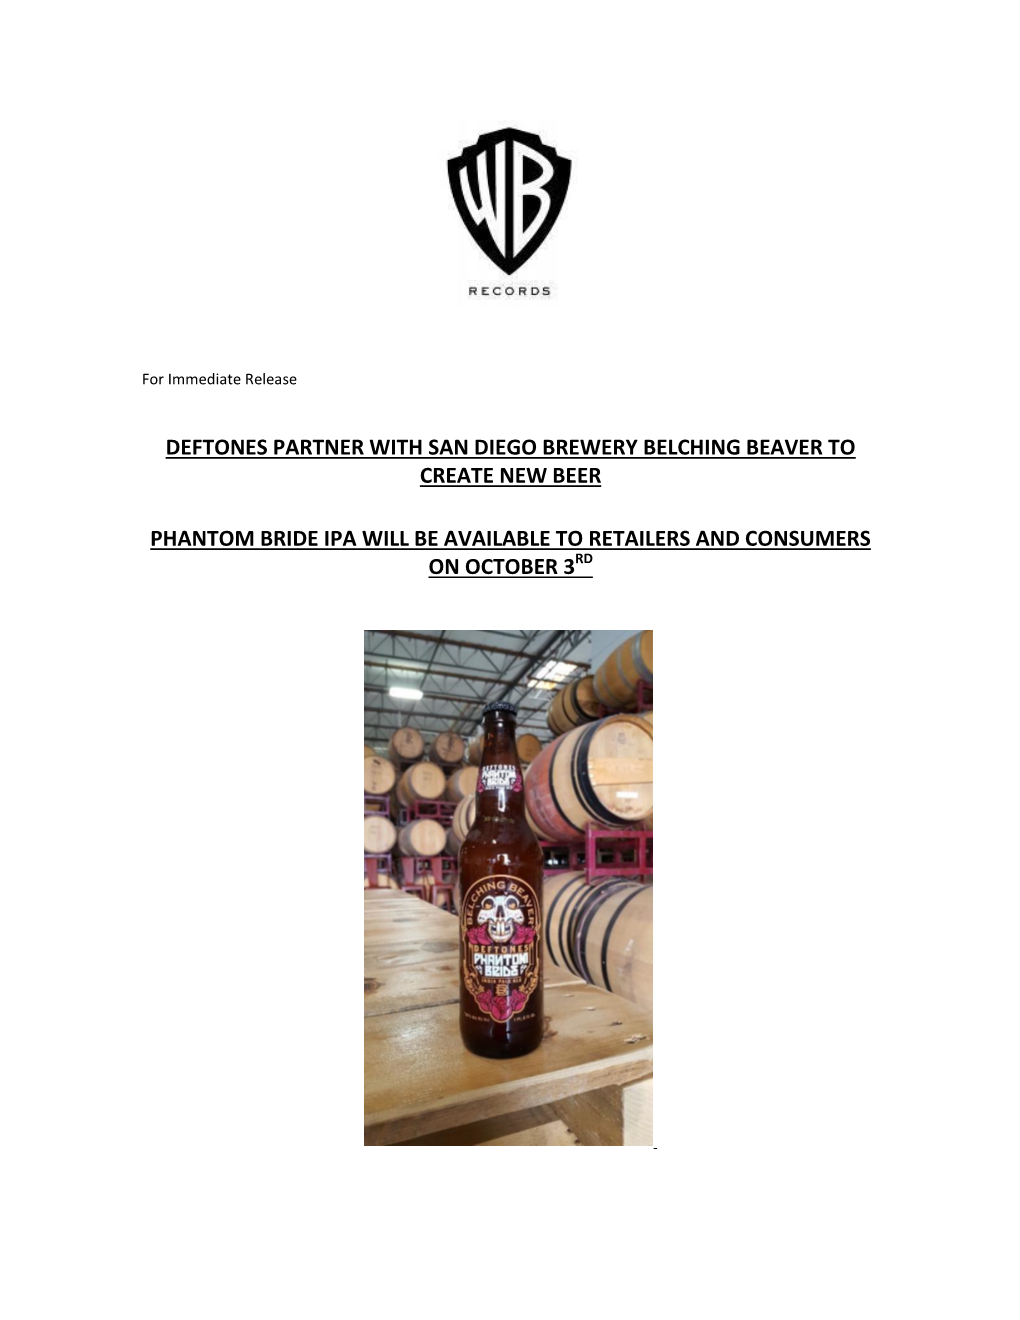 Deftones Partner with San Diego Brewery Belching Beaver to Create New Beer